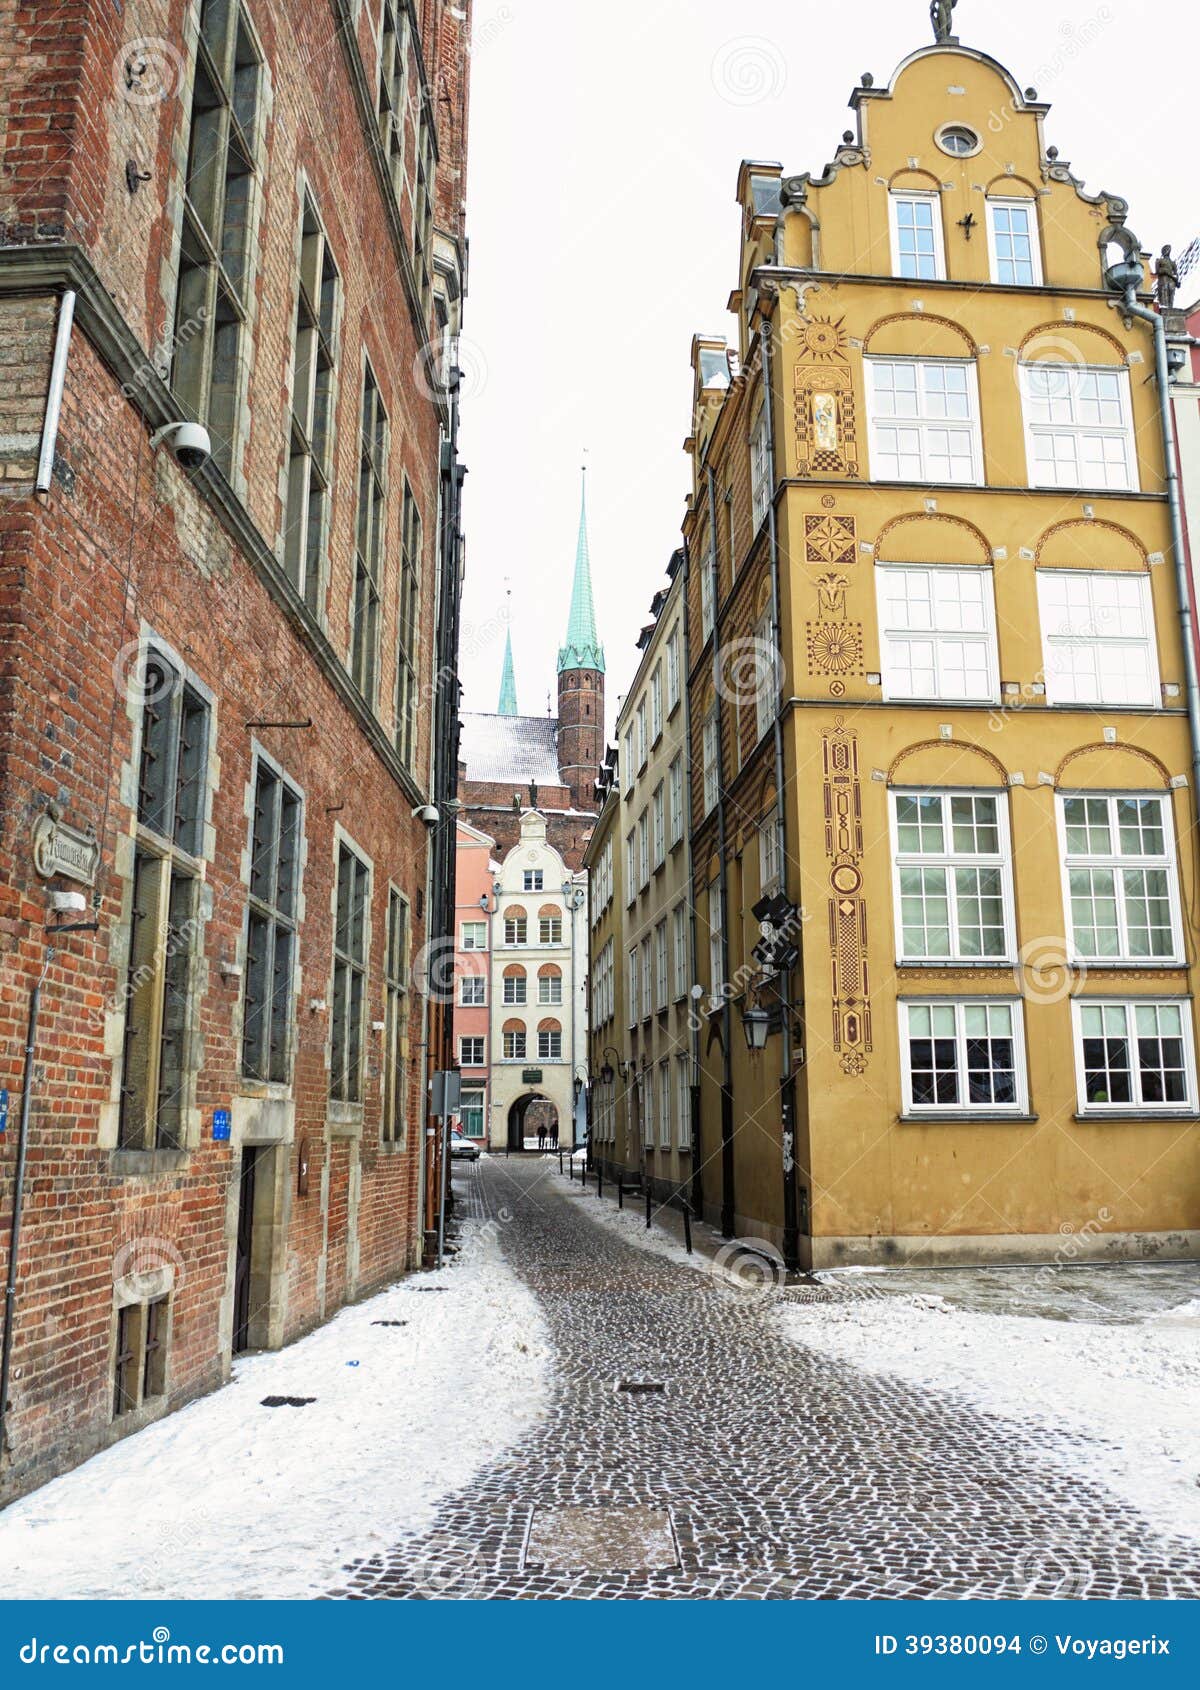 old town gdansk danzig poland, winter